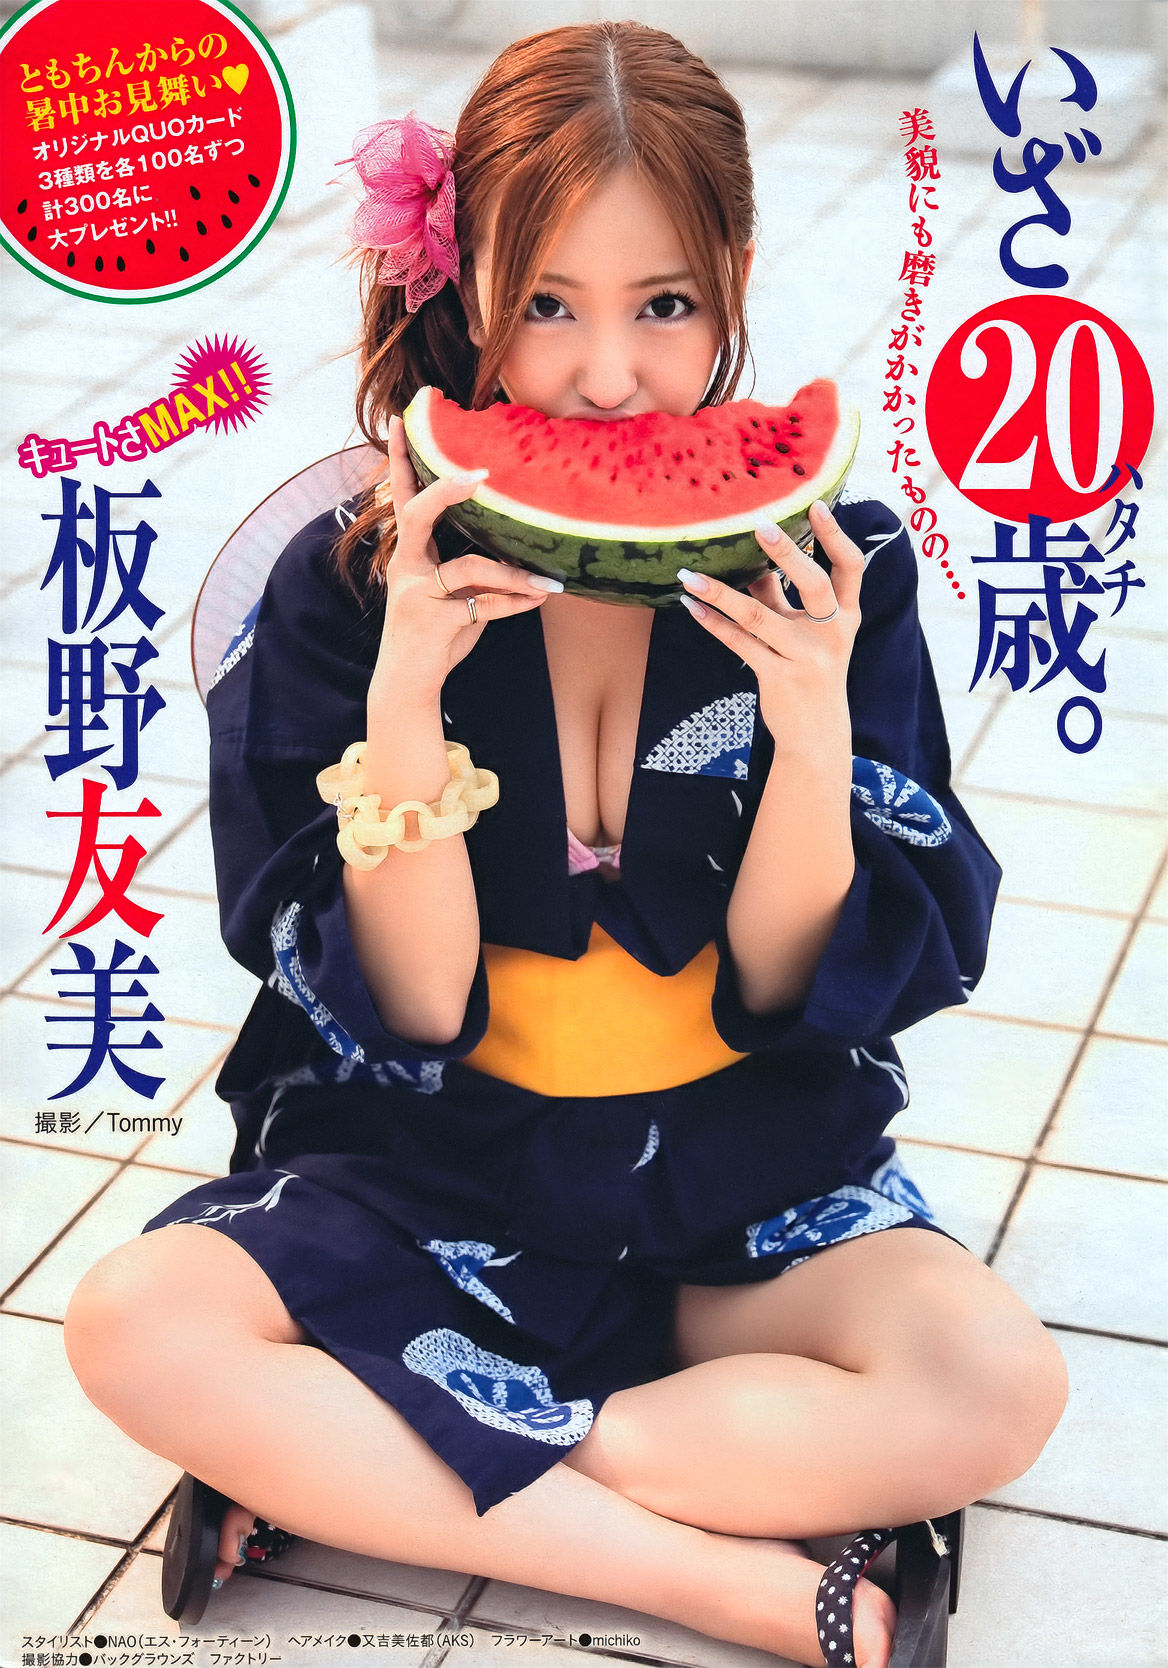 [Young Magazine]嫩模日本女星:板野友美(ともちん)高品质壁纸图片珍藏版(19P)